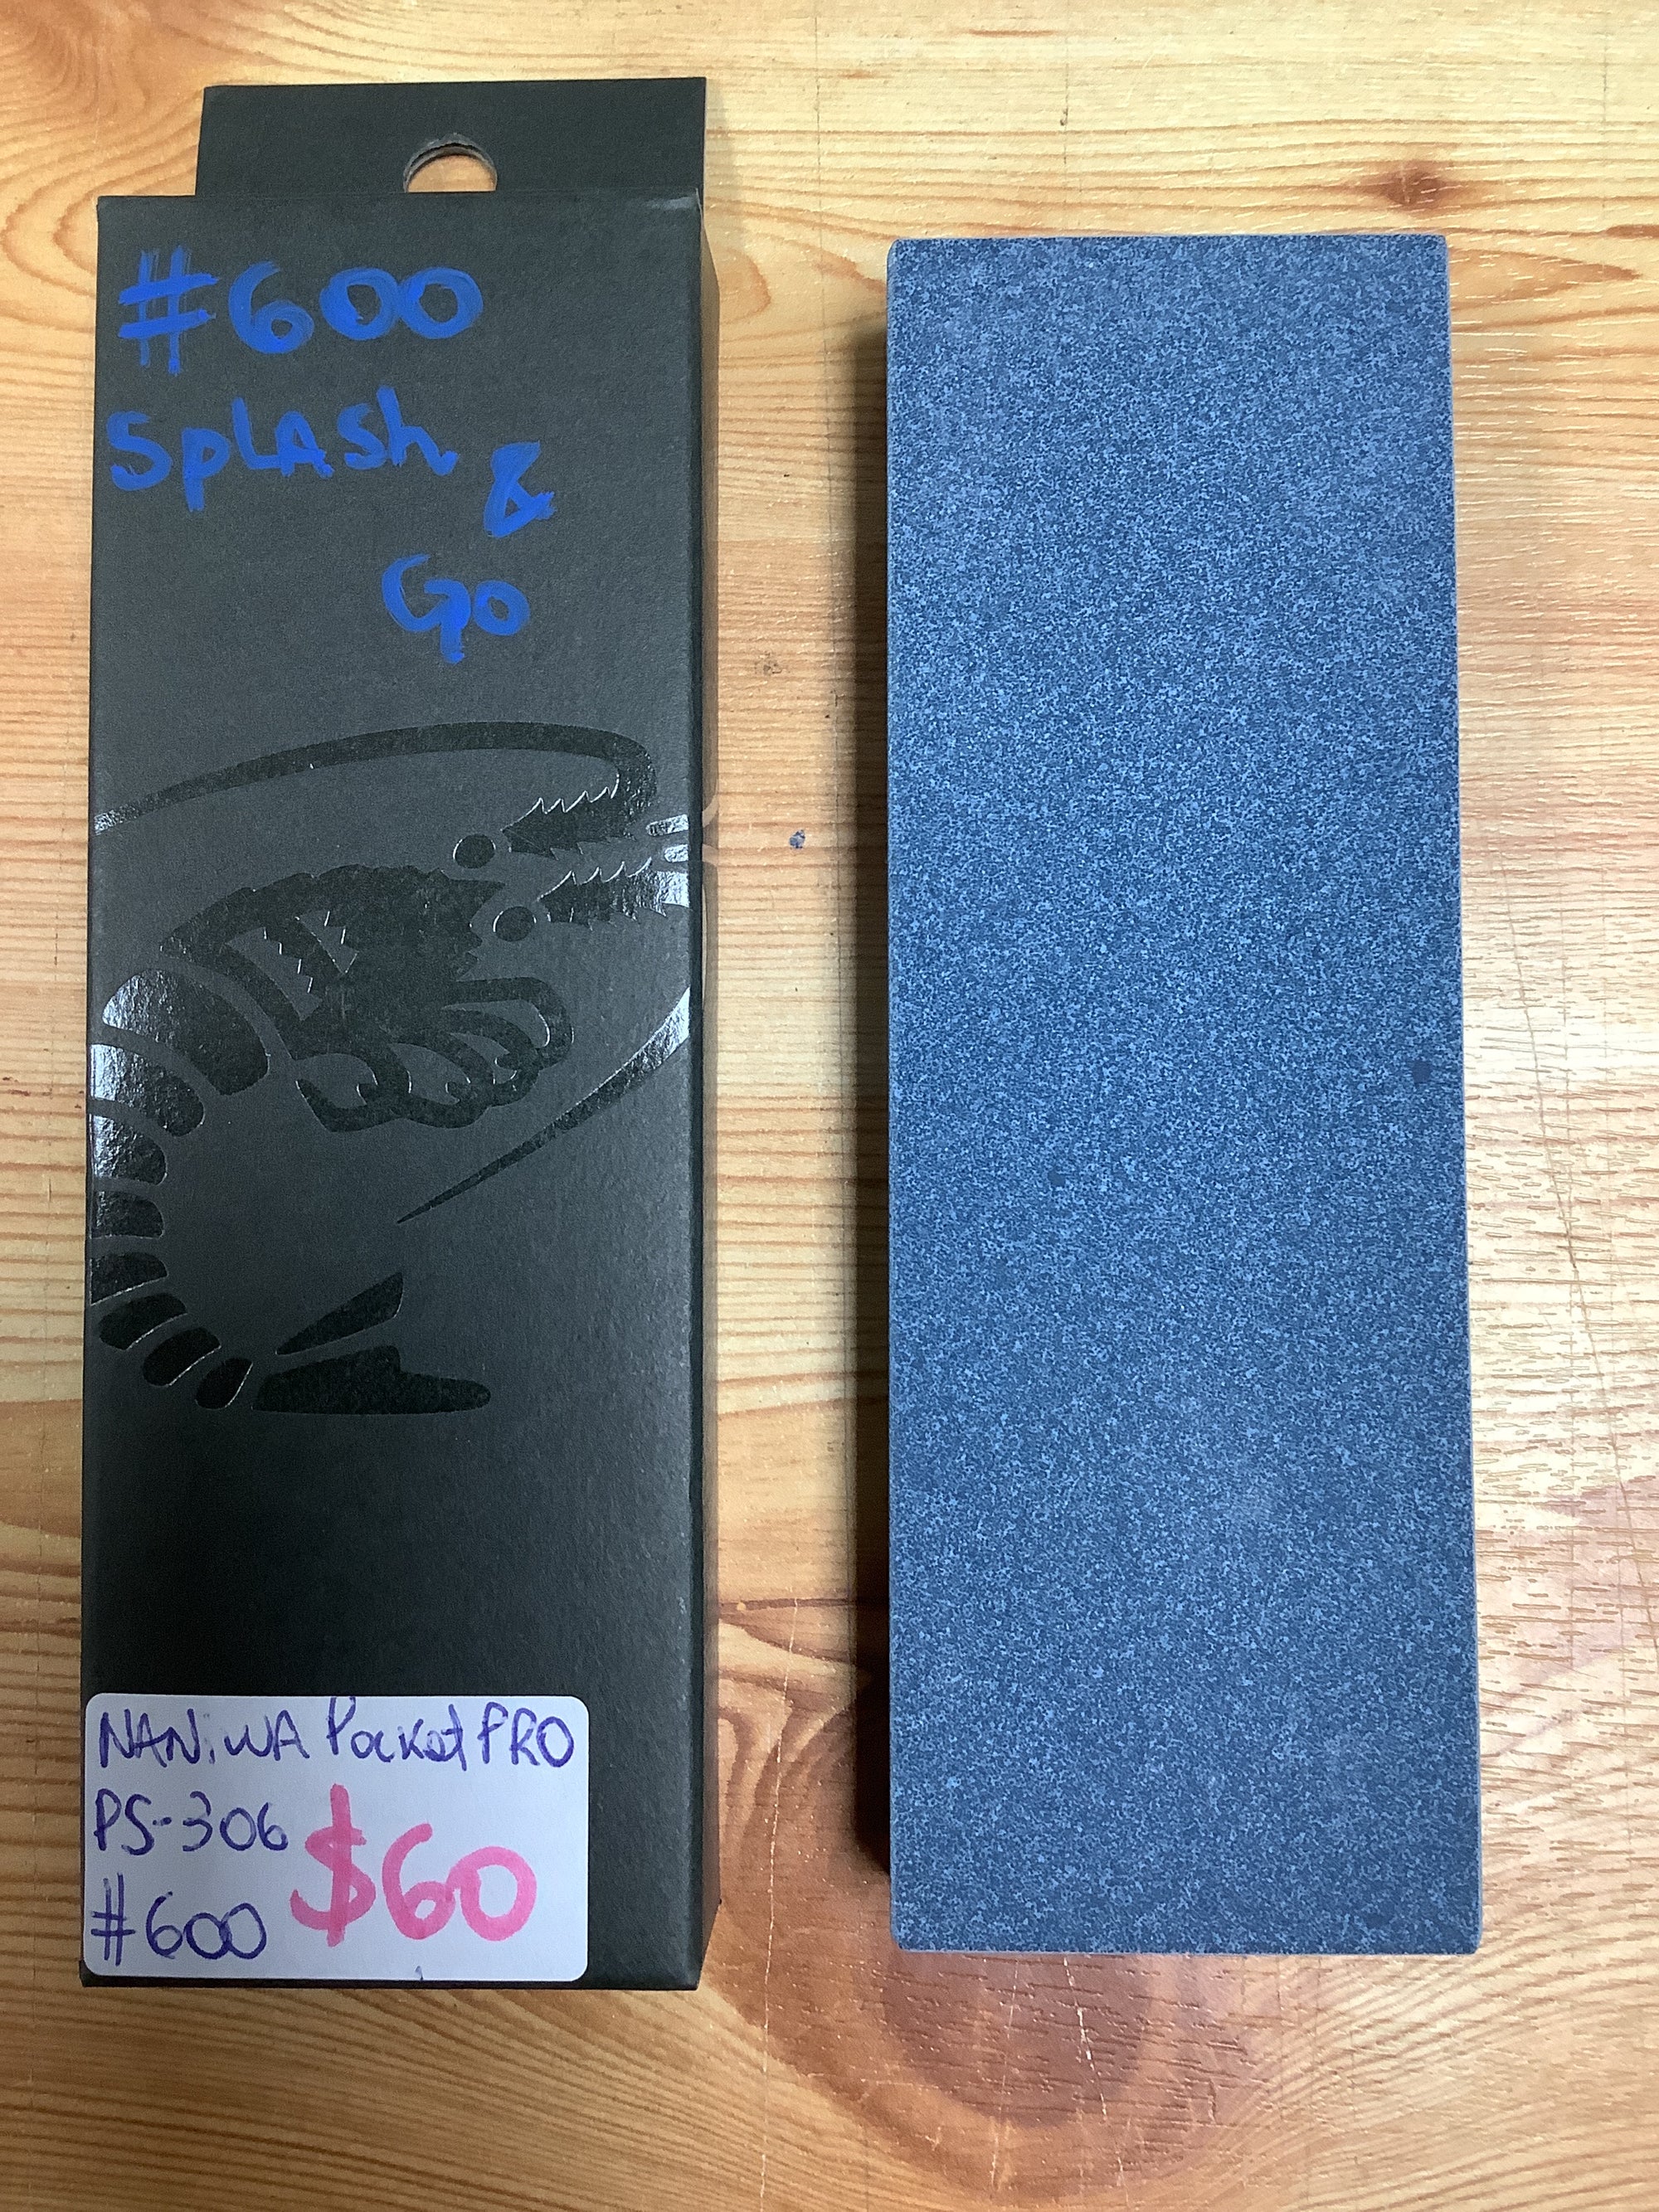 Naniwa Pocket Pro Stone #600 Grit PS-306 - Koi Knives